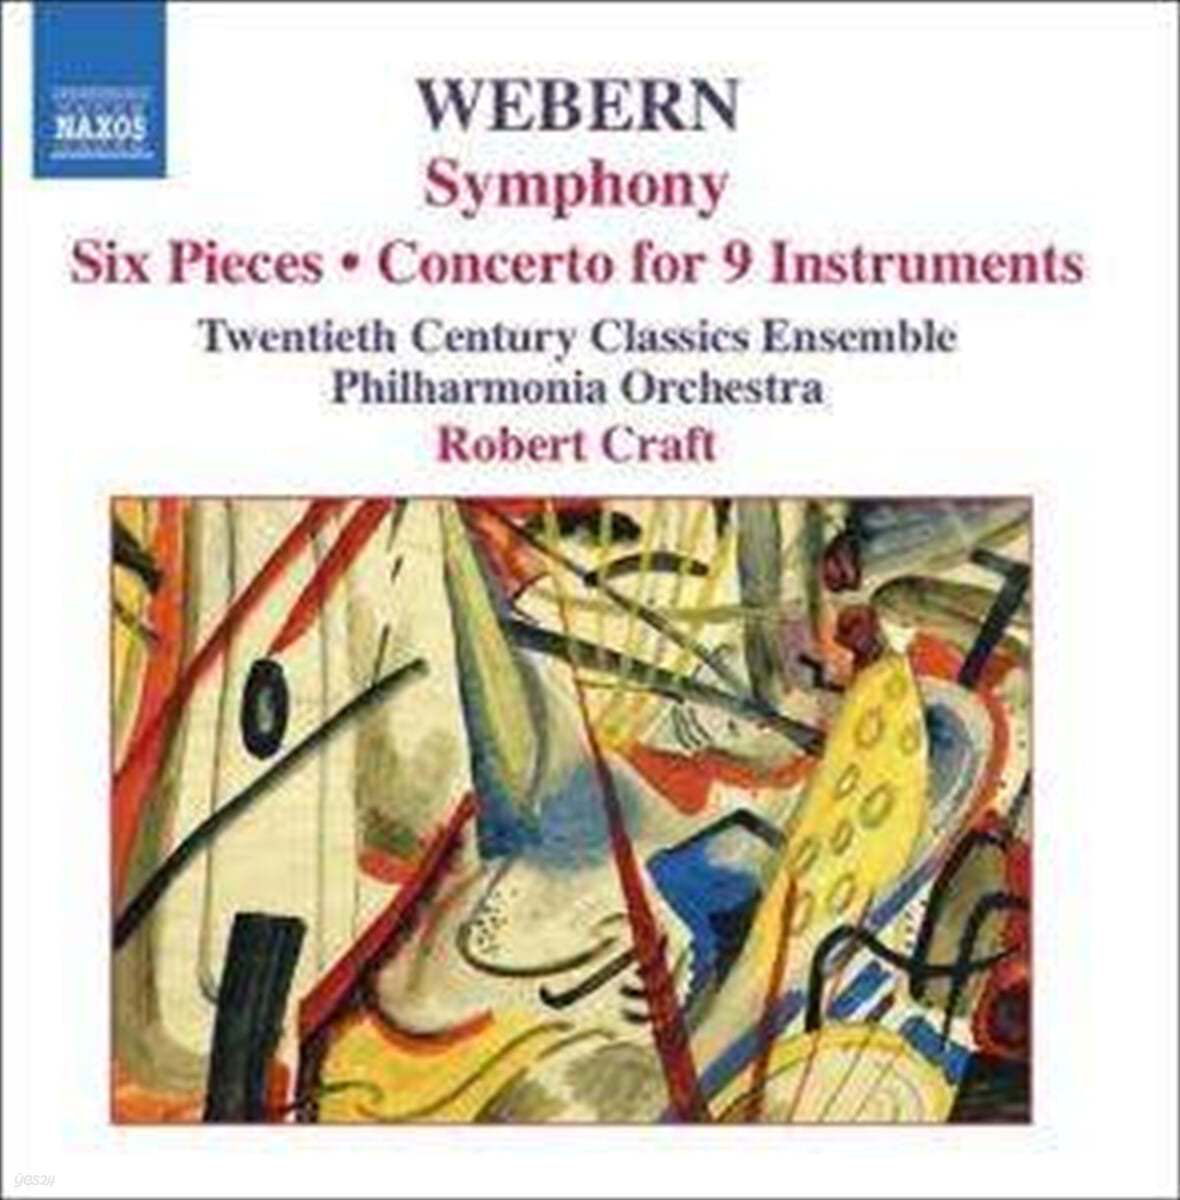 Robert Craft 안톤 베버른: 교향곡, 6개의 소품, 9개의 악기를 위한 협주곡 (Webern: Symphony, Six Pieces, Concerto for 9 Instruments) 